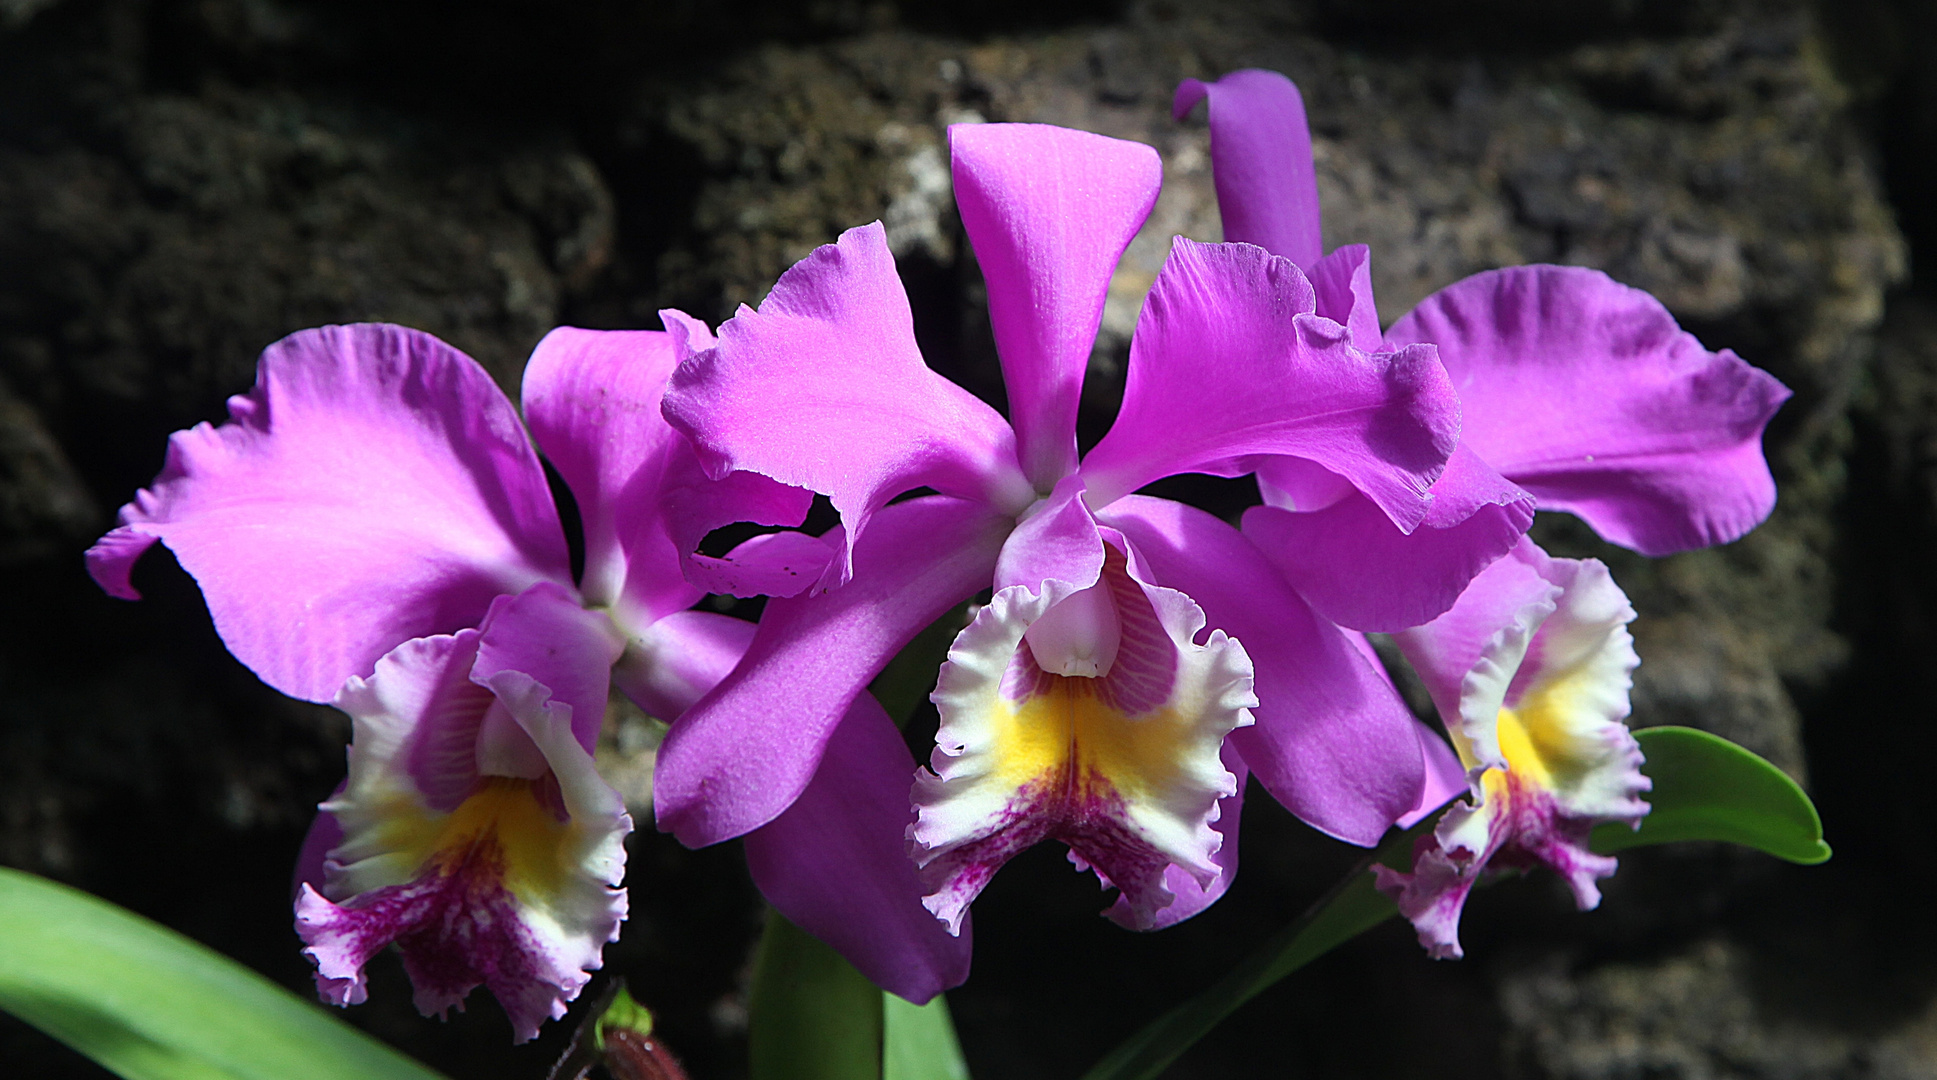 Orchideen-Trio ..